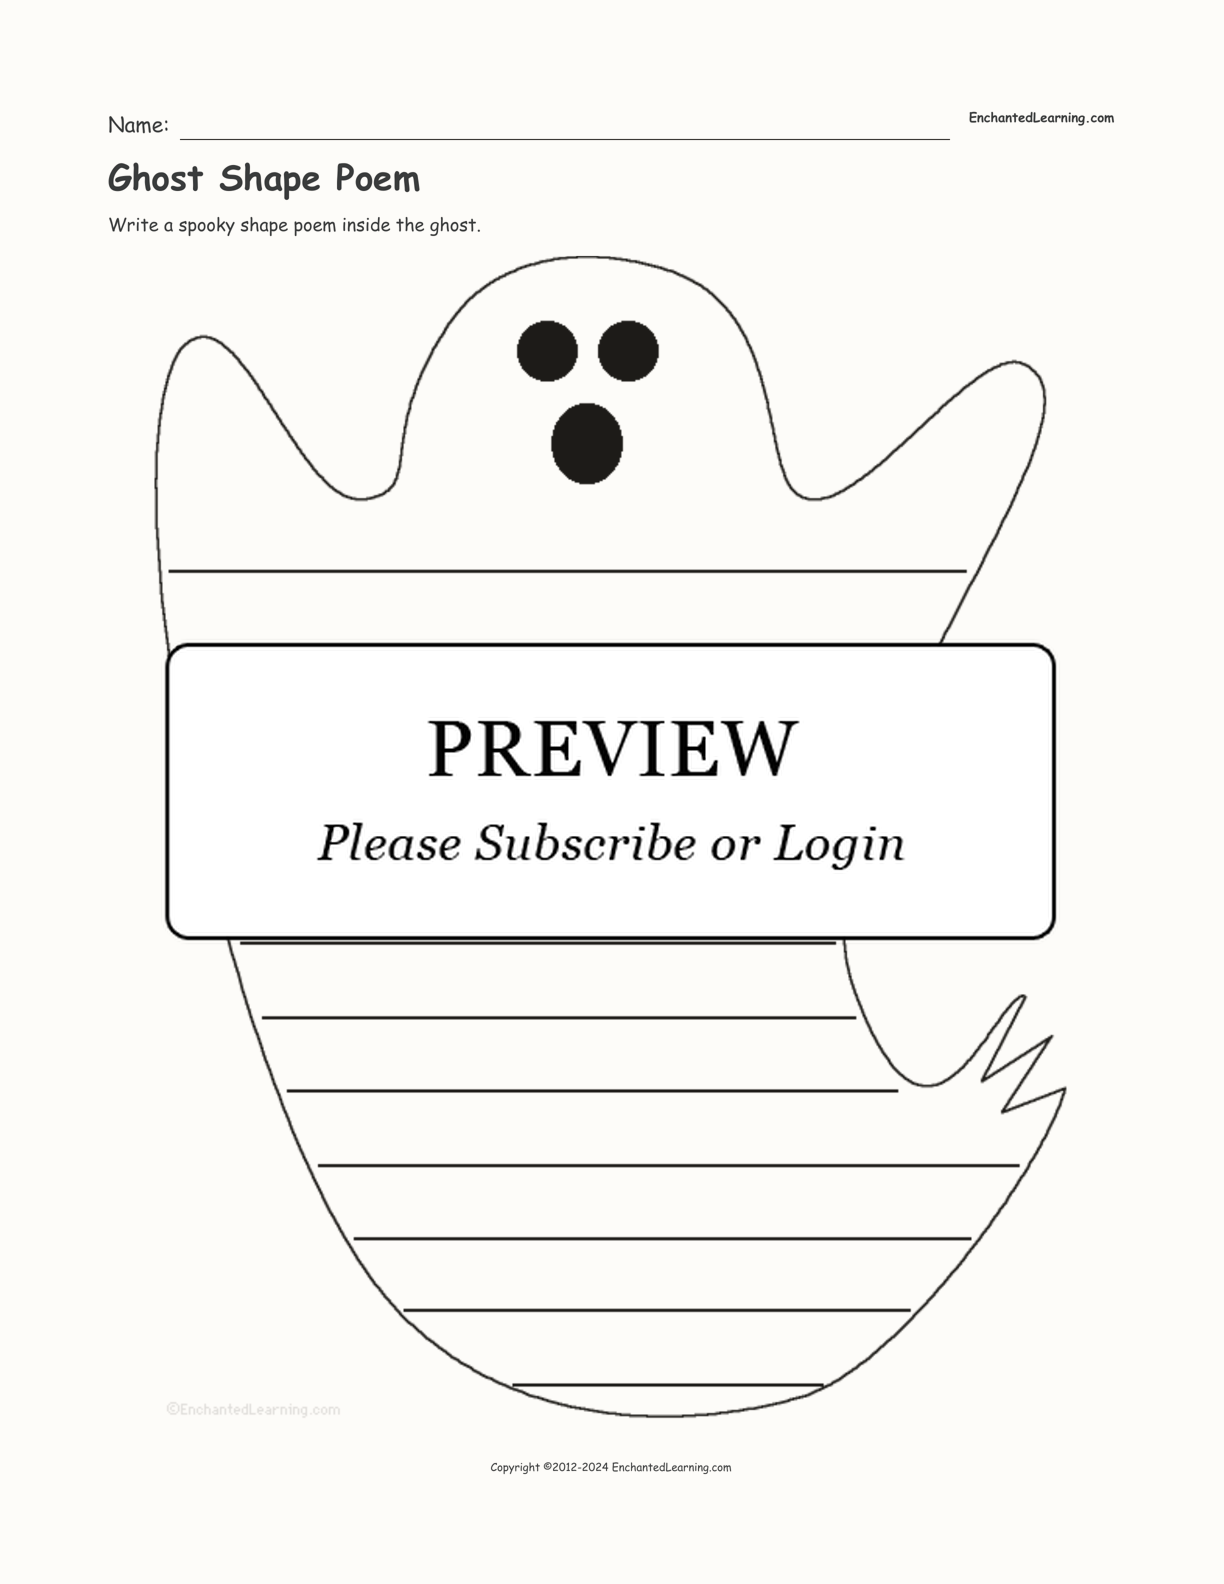 Ghost Shape Poem interactive worksheet page 1